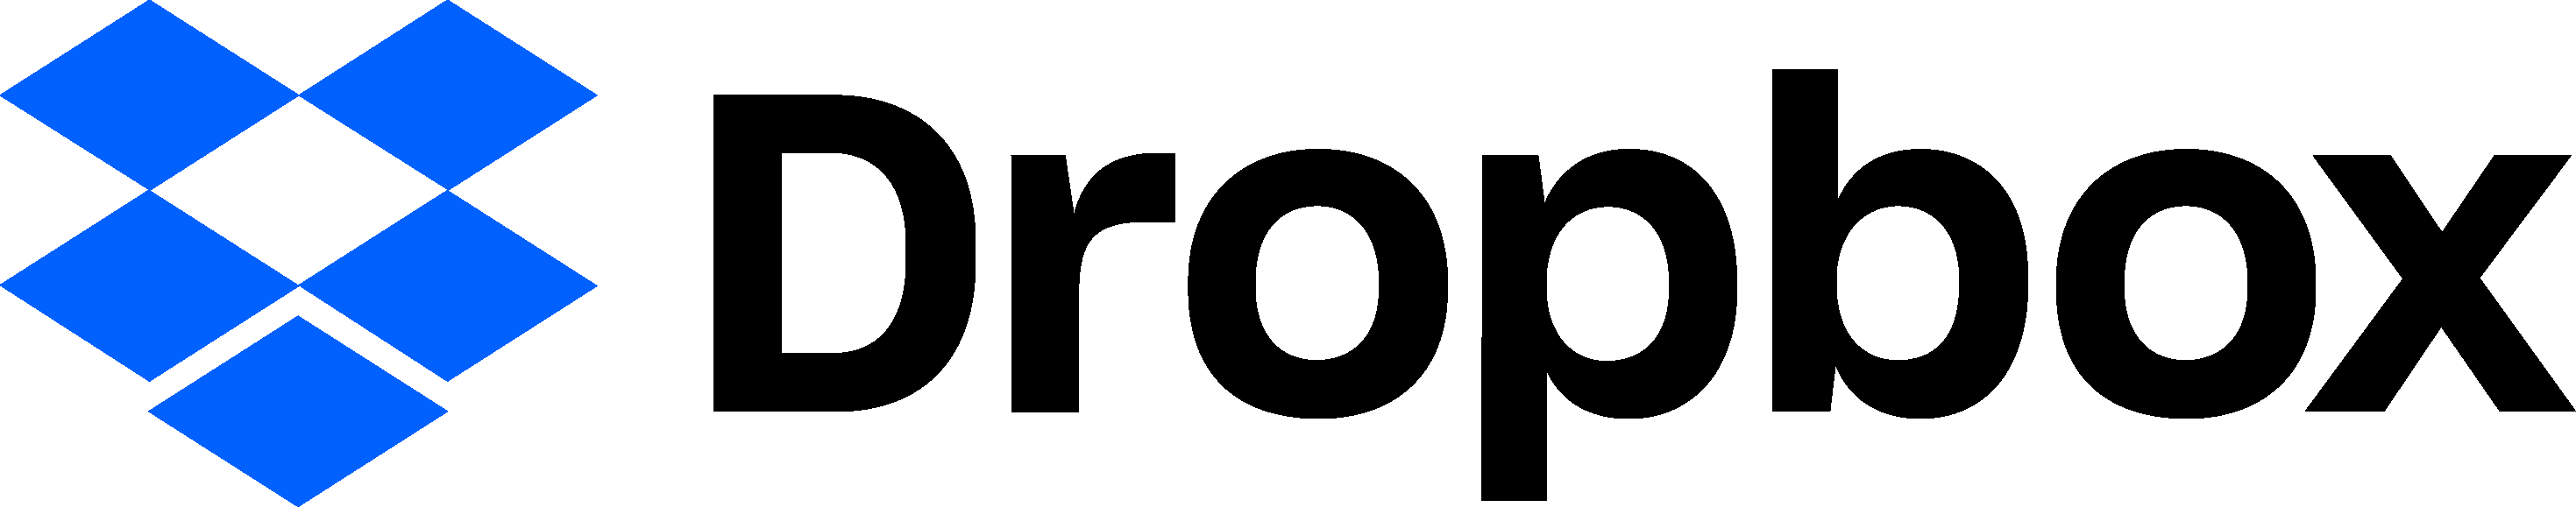 Dropbox Logo png